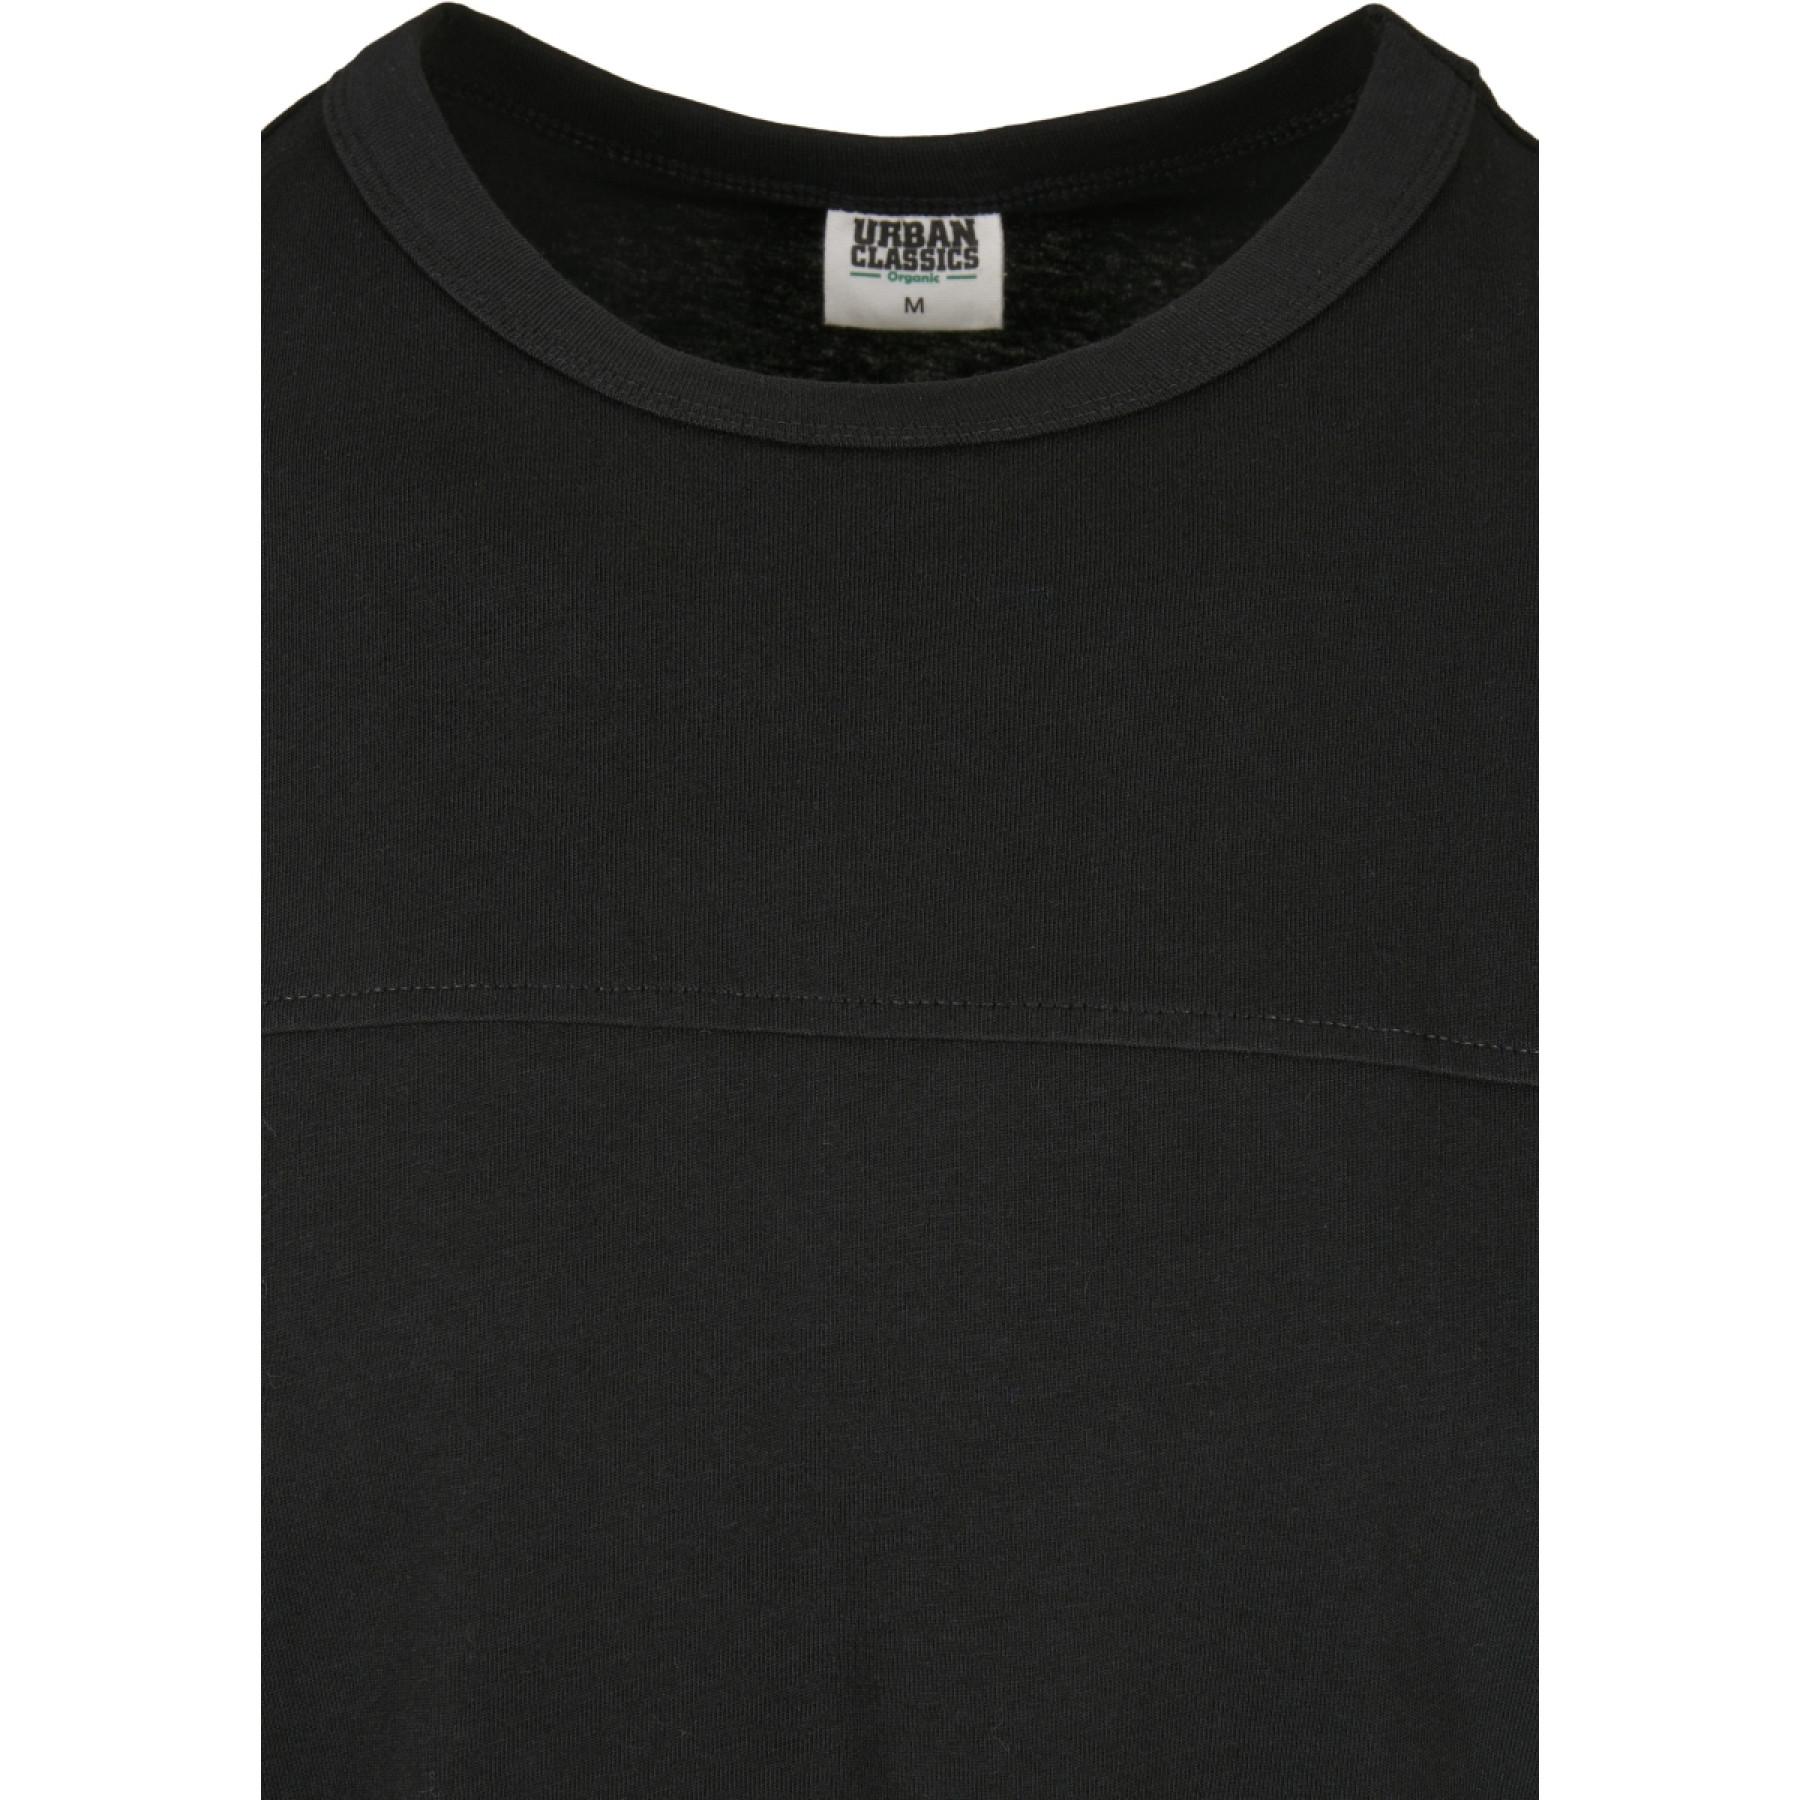 T-shirt manches longues Urban Classics coton organique oversized